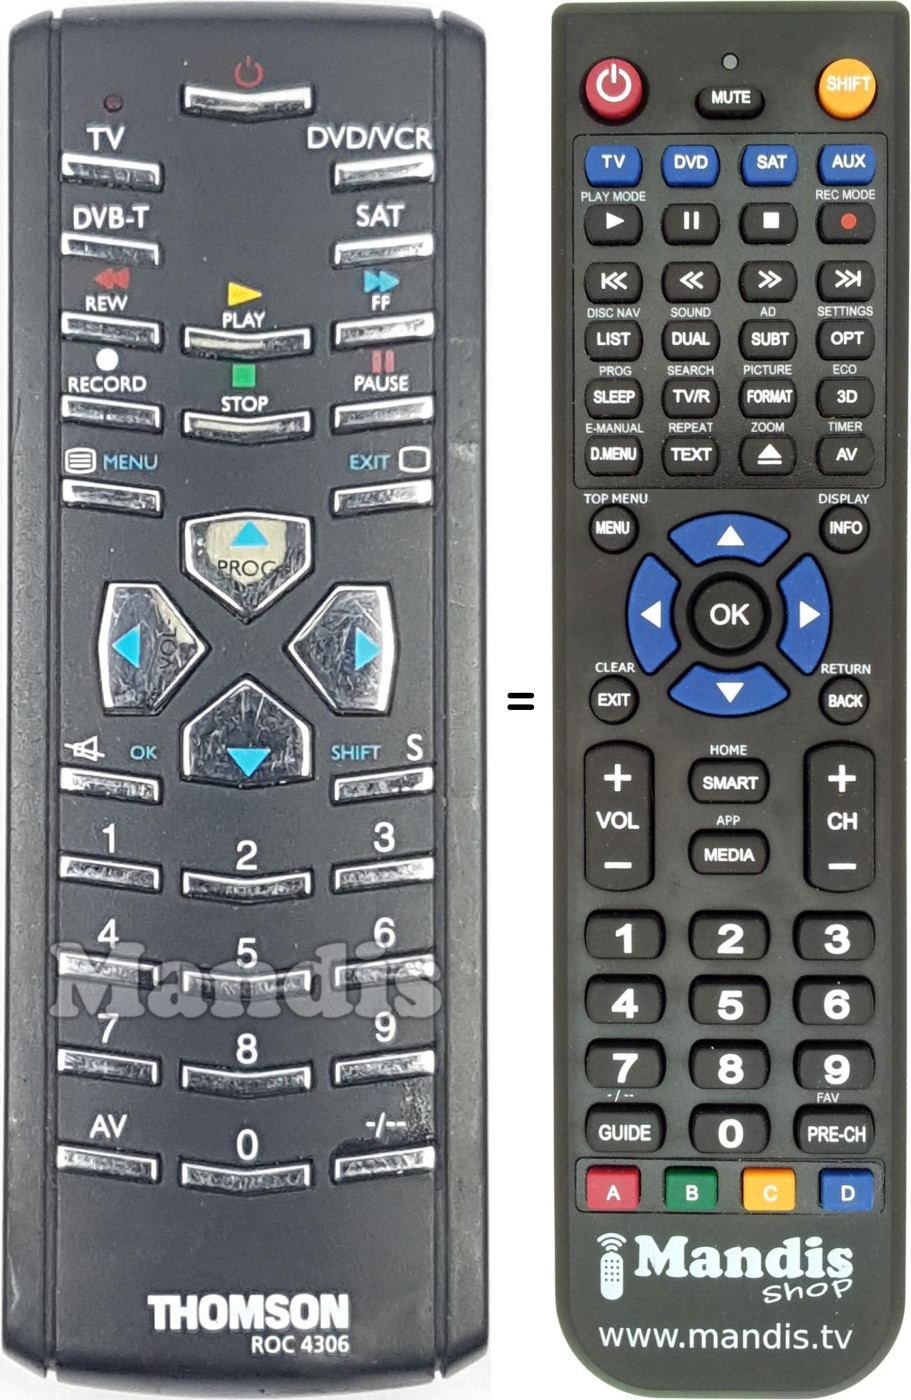 Replacement remote control ROC4306